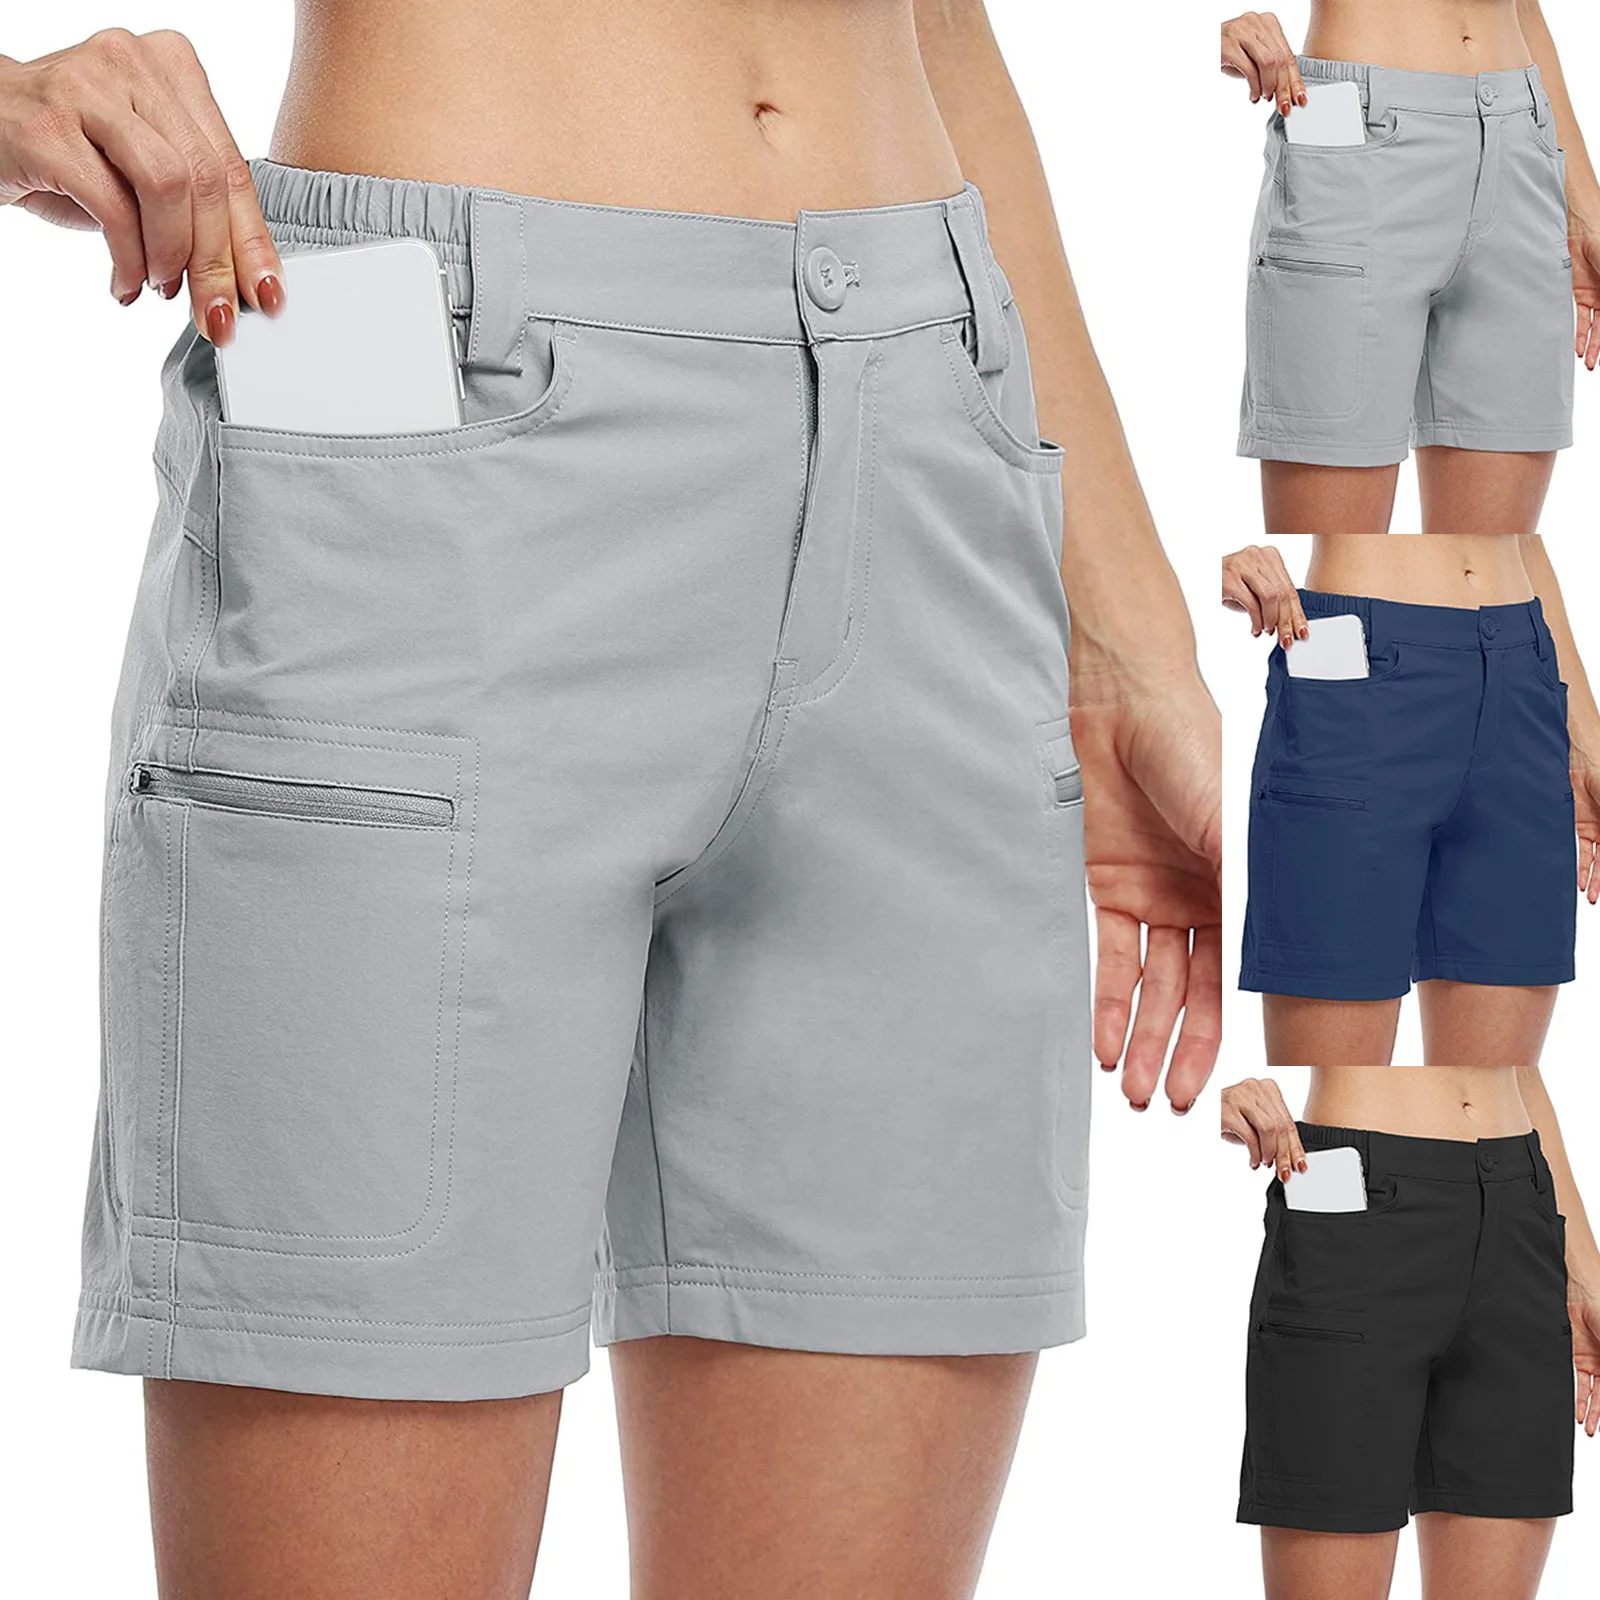 gymshark shorts Women Summer Casual Shorts Solid Color High Waist Elastic Cargo Short Pants Pockets Girl Streetwear burberry shorts